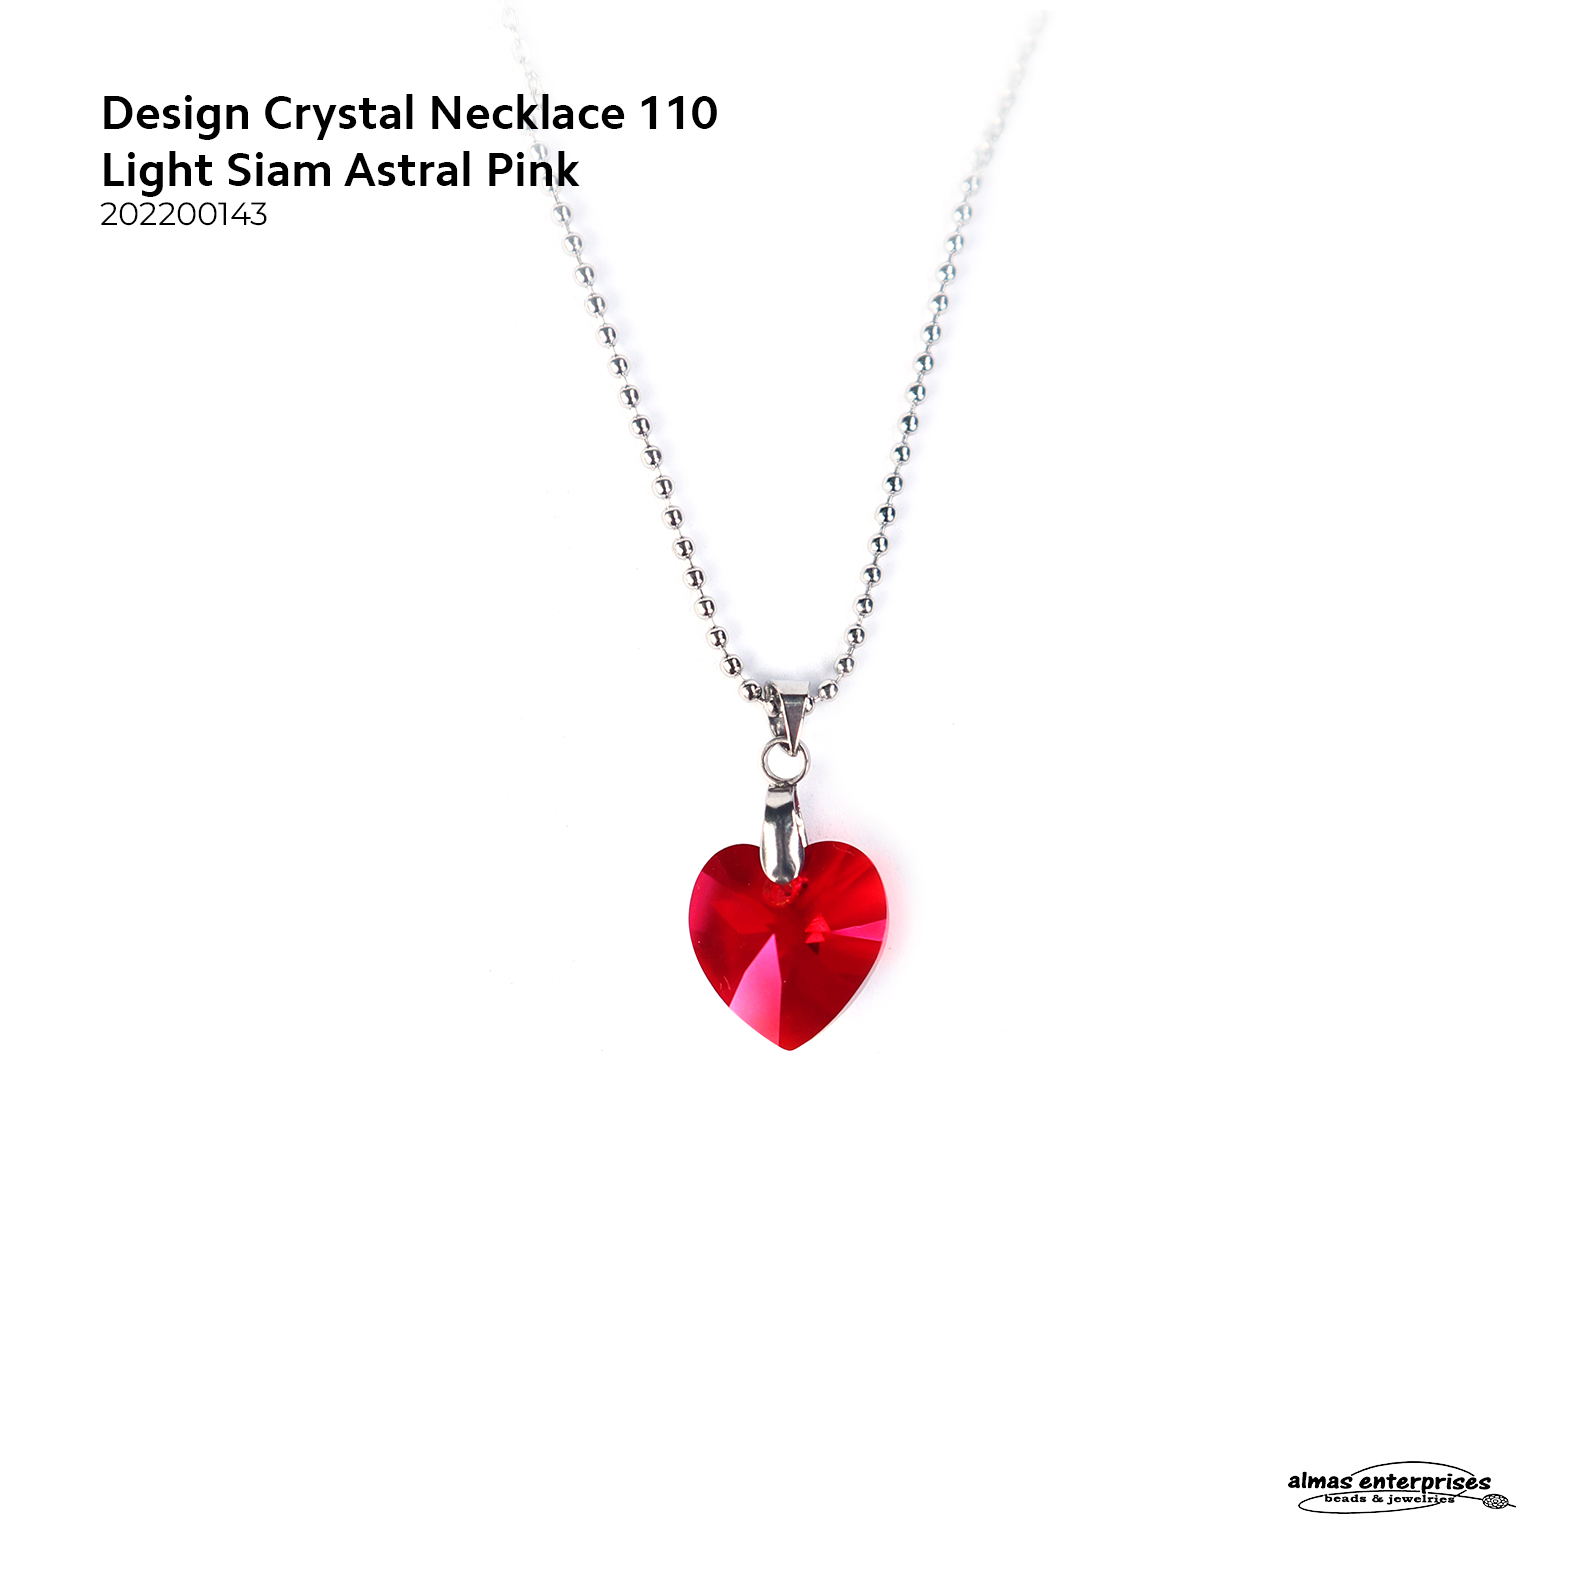 Design Crystal Necklace 110